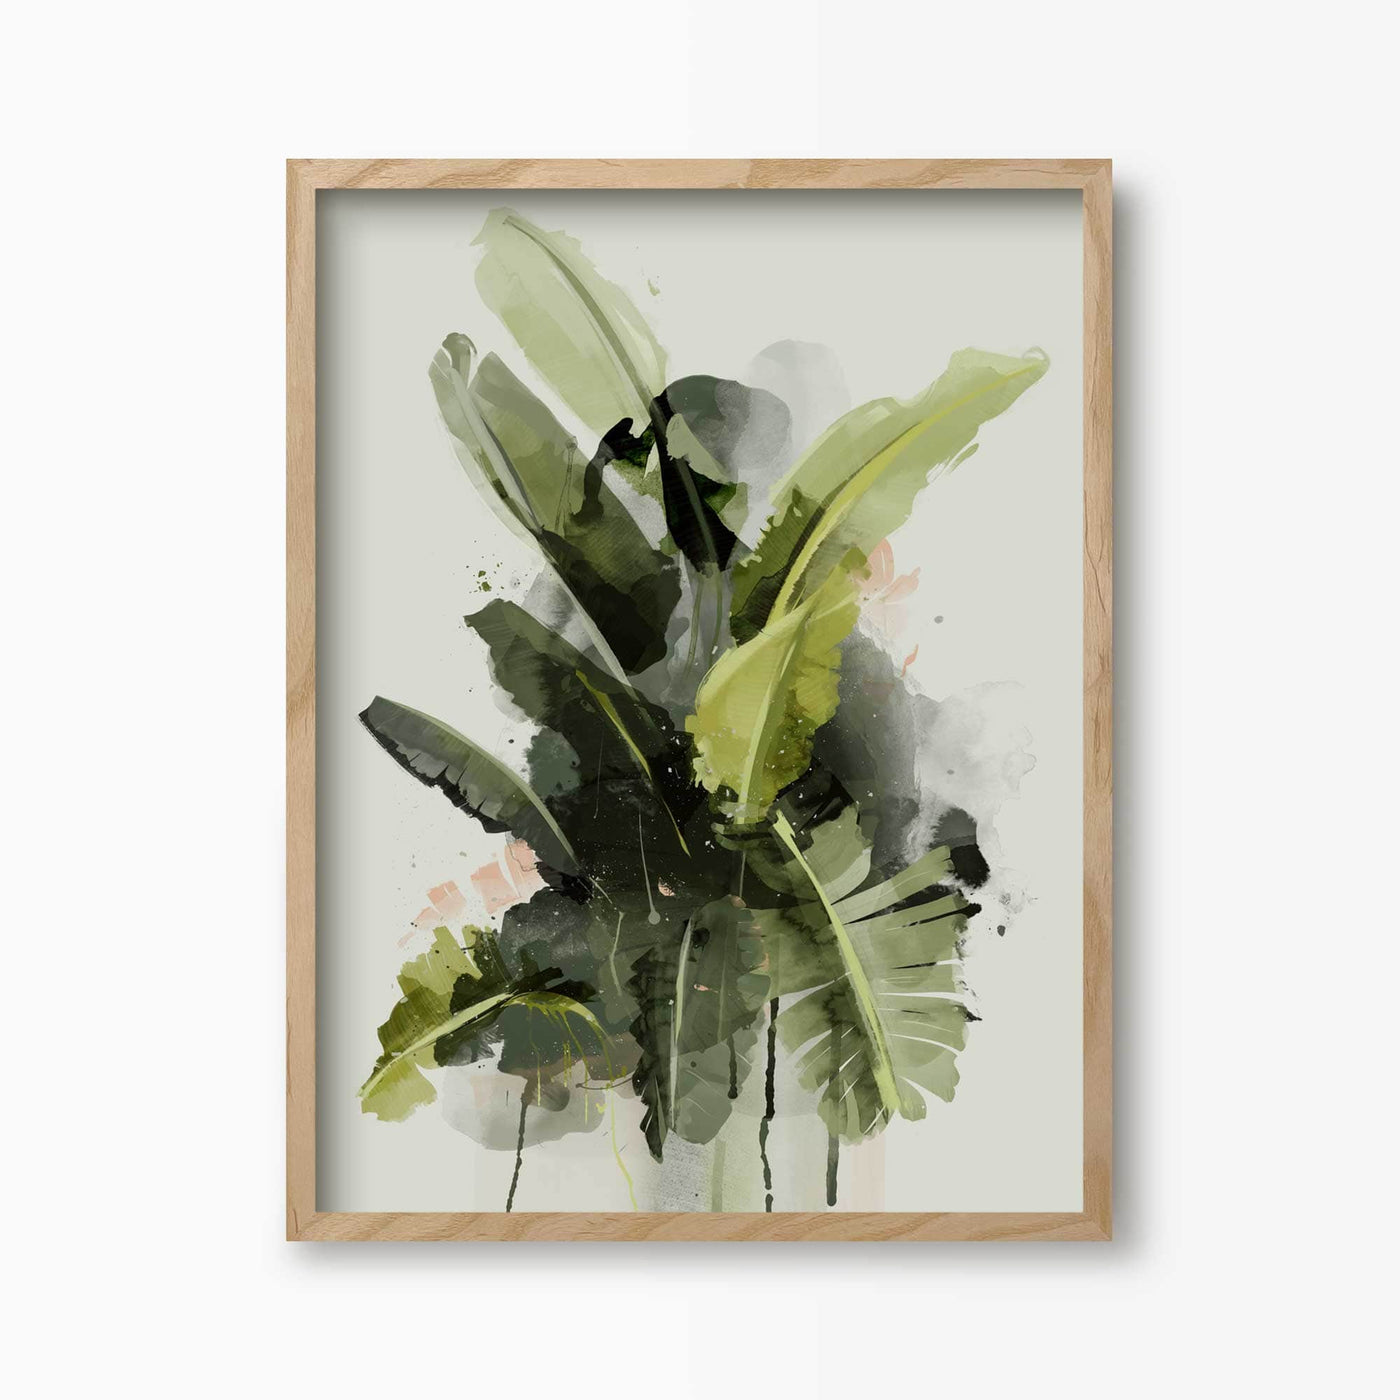 Green Lili 30x40cm (12x16") / Natural Frame Abstract Banana Leaf Art Print